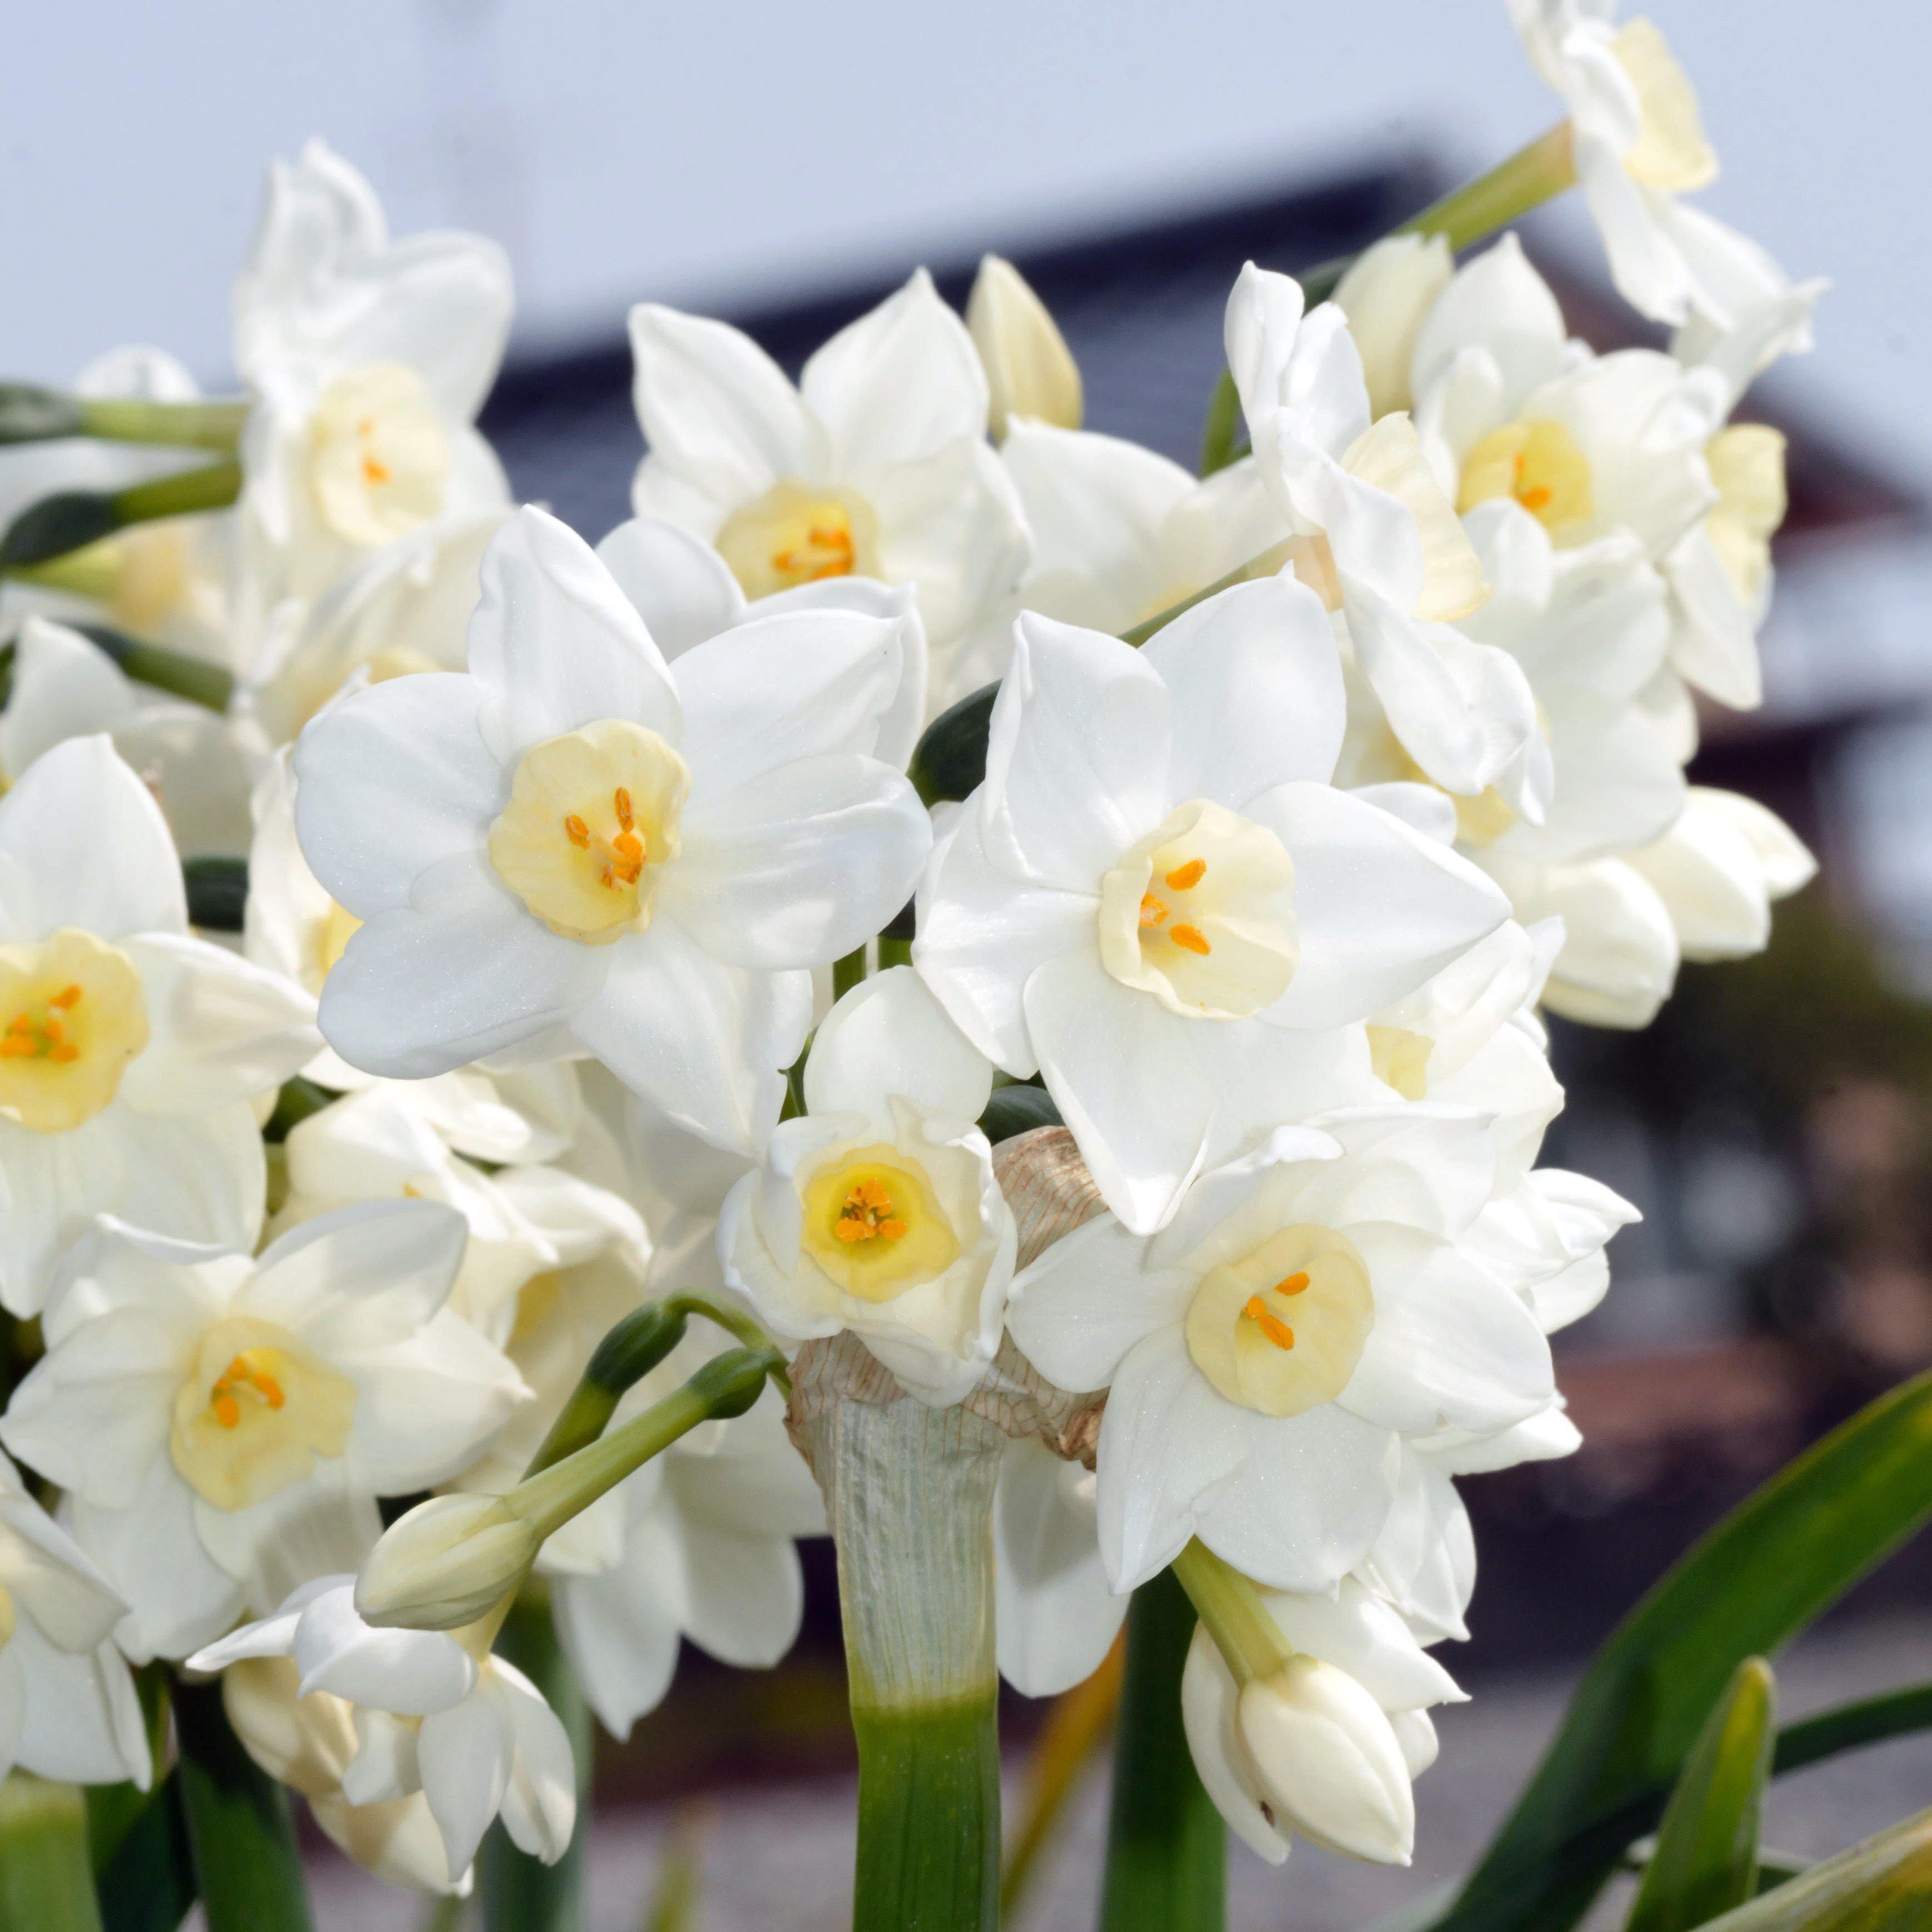 17+cm Narcissus Inbal (Israeli Paperwhites) Bulbs For Sale – Easy To Grow  Bulbs